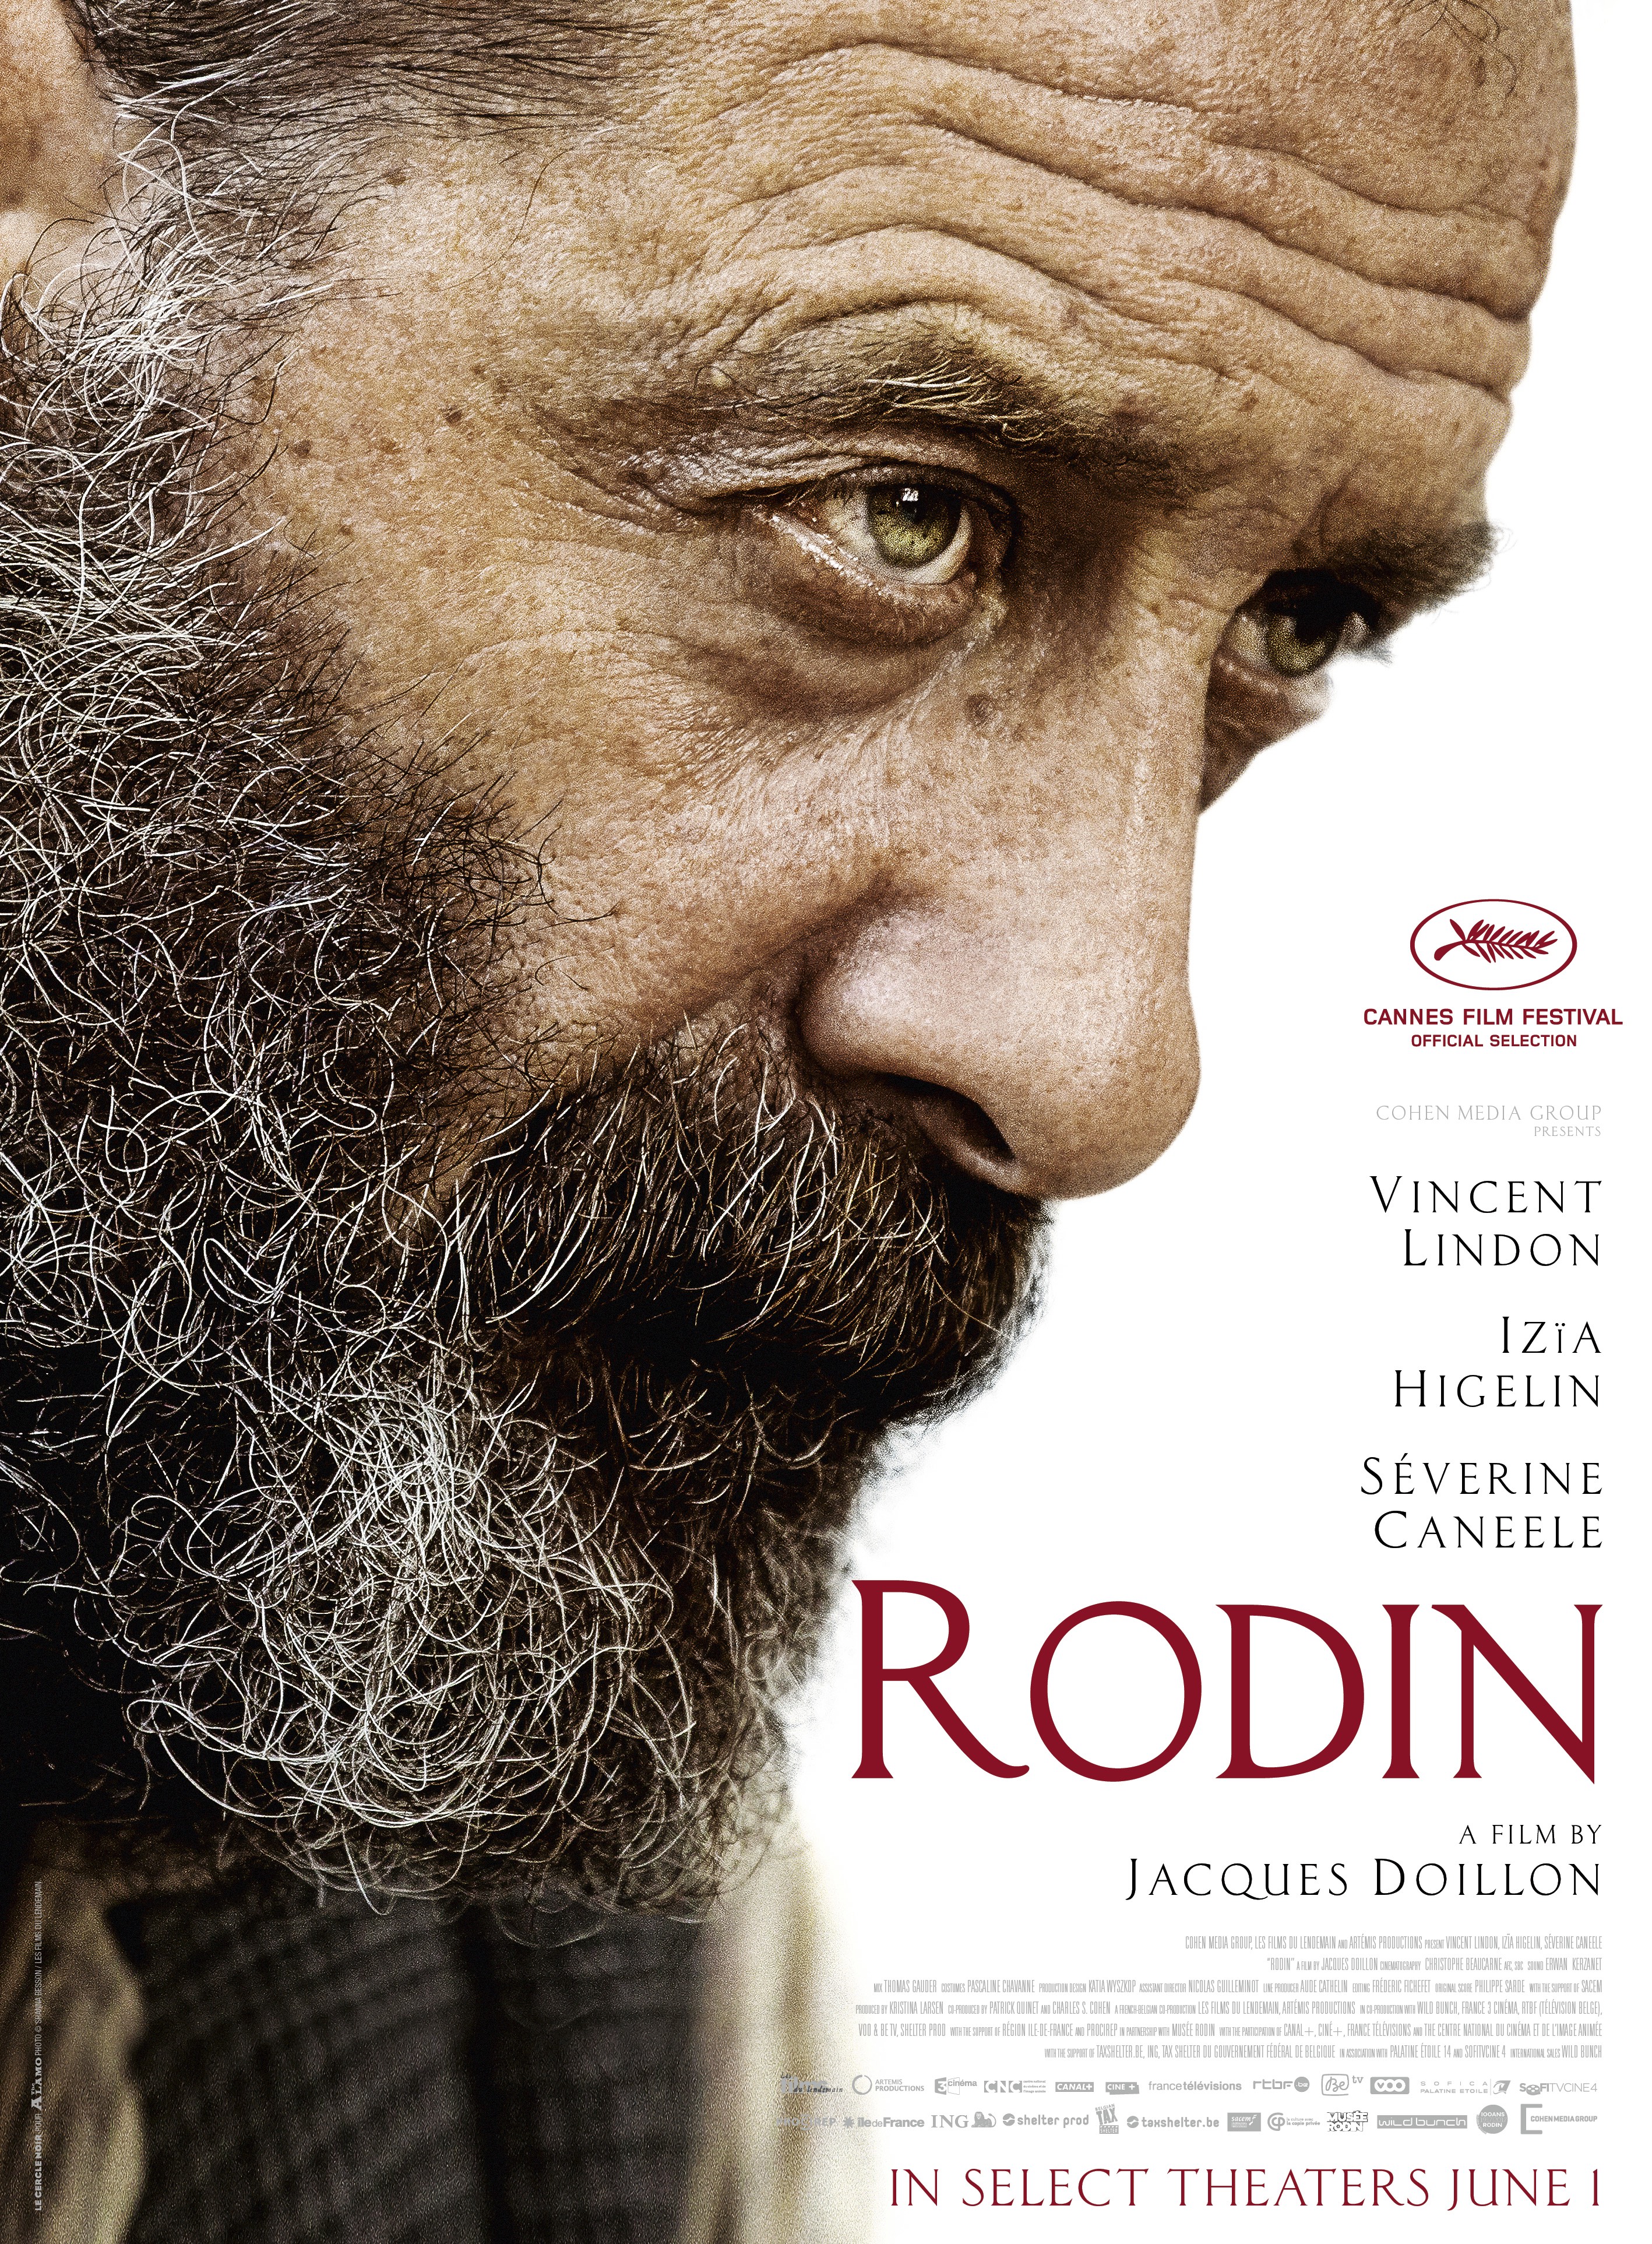 Nonton film Rodin layarkaca21 indoxx1 ganool online streaming terbaru